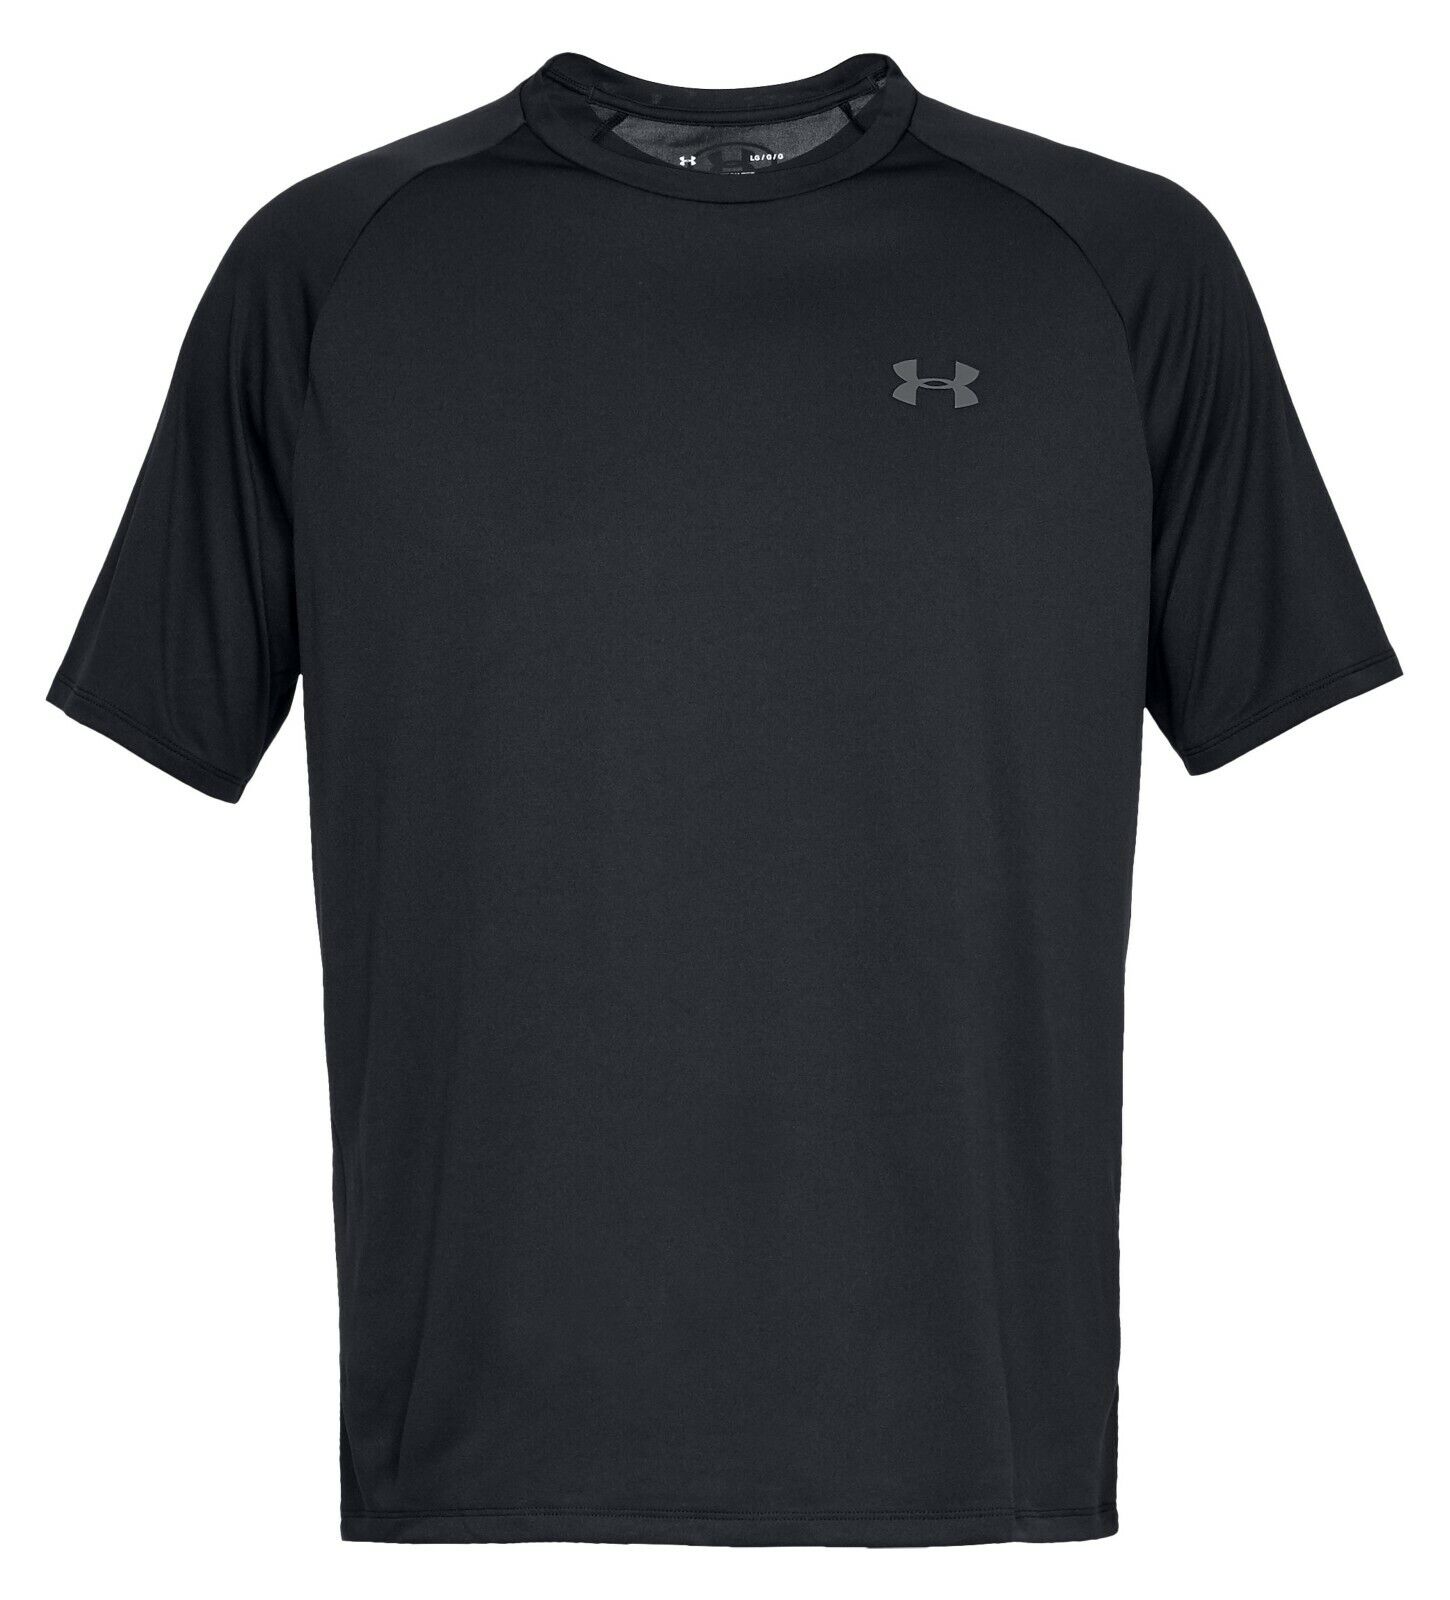 Under Armour Men's Tech 2.0 Short Sleeve Athletic Shirt 1326413